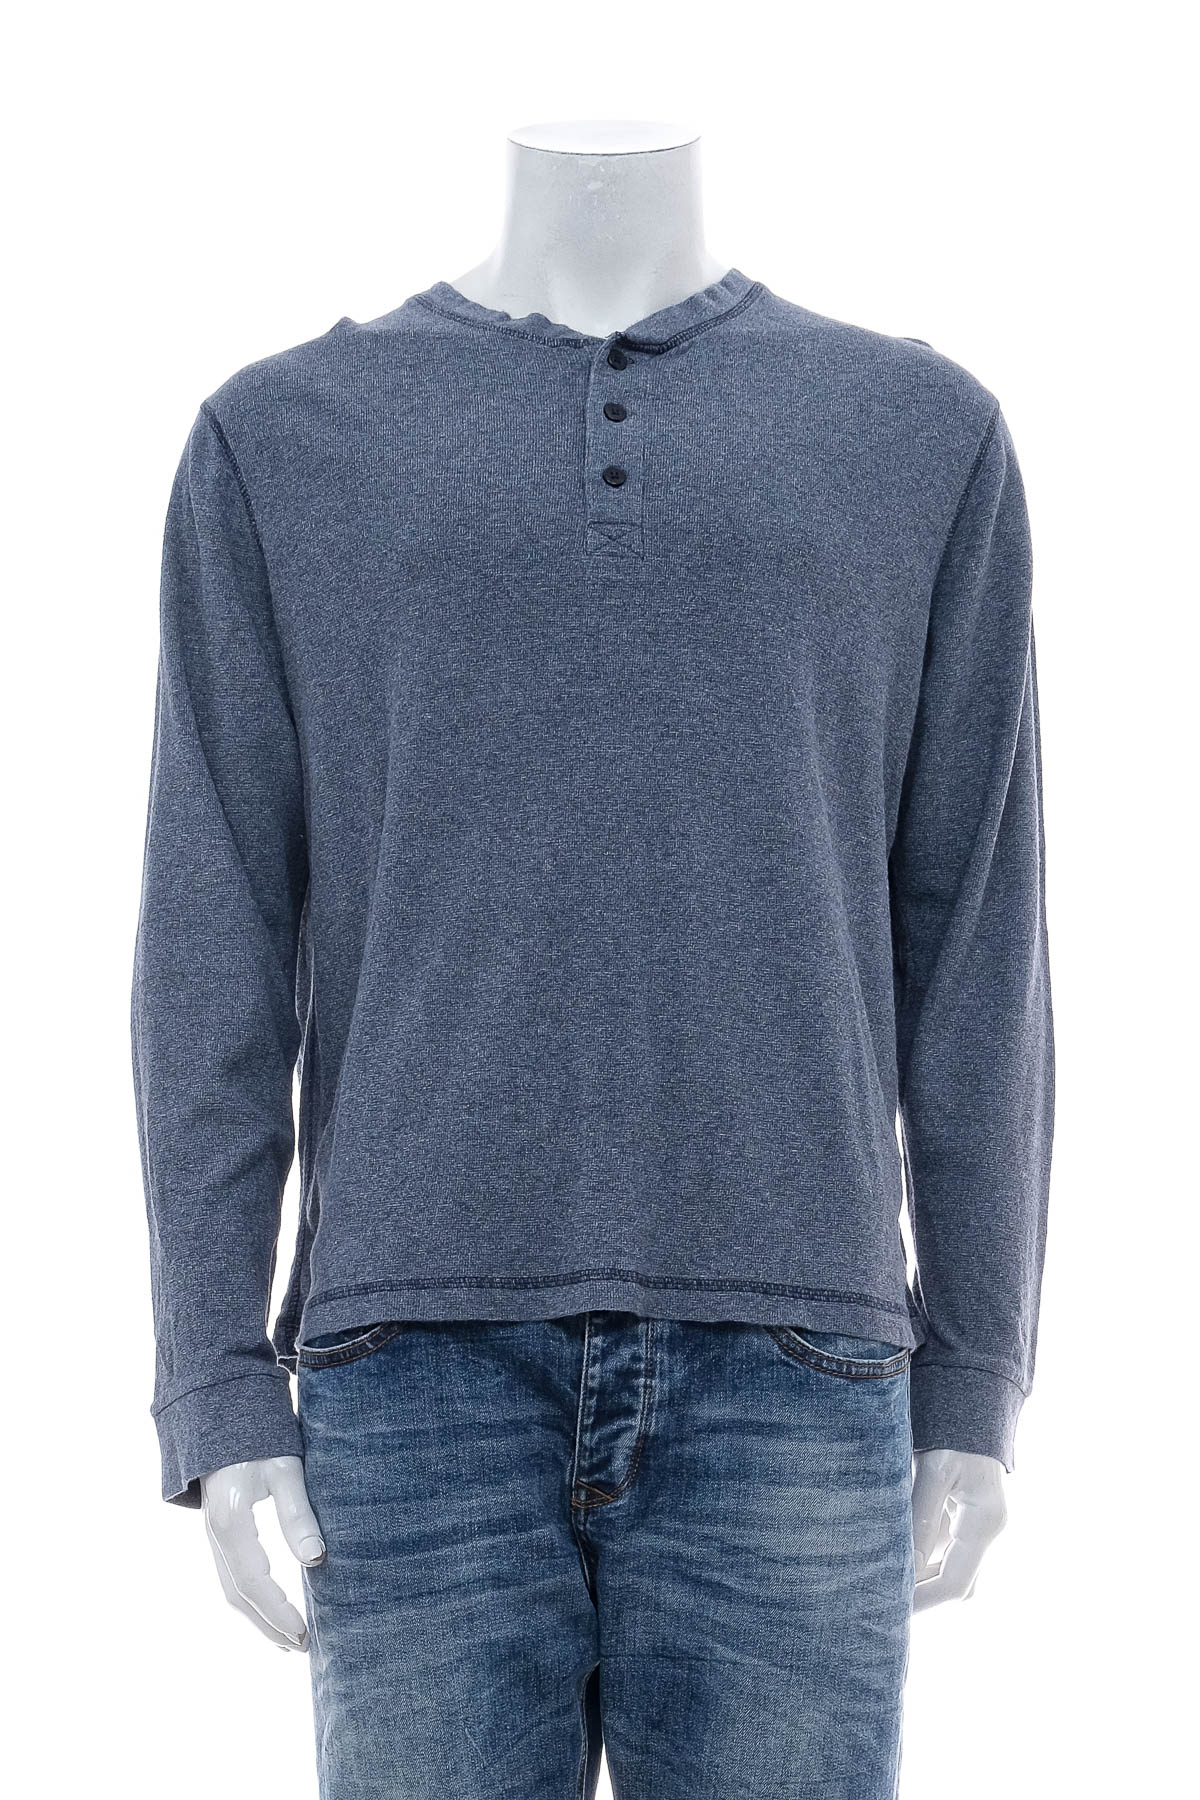 Men's sweater - LOGAN HILL - 0